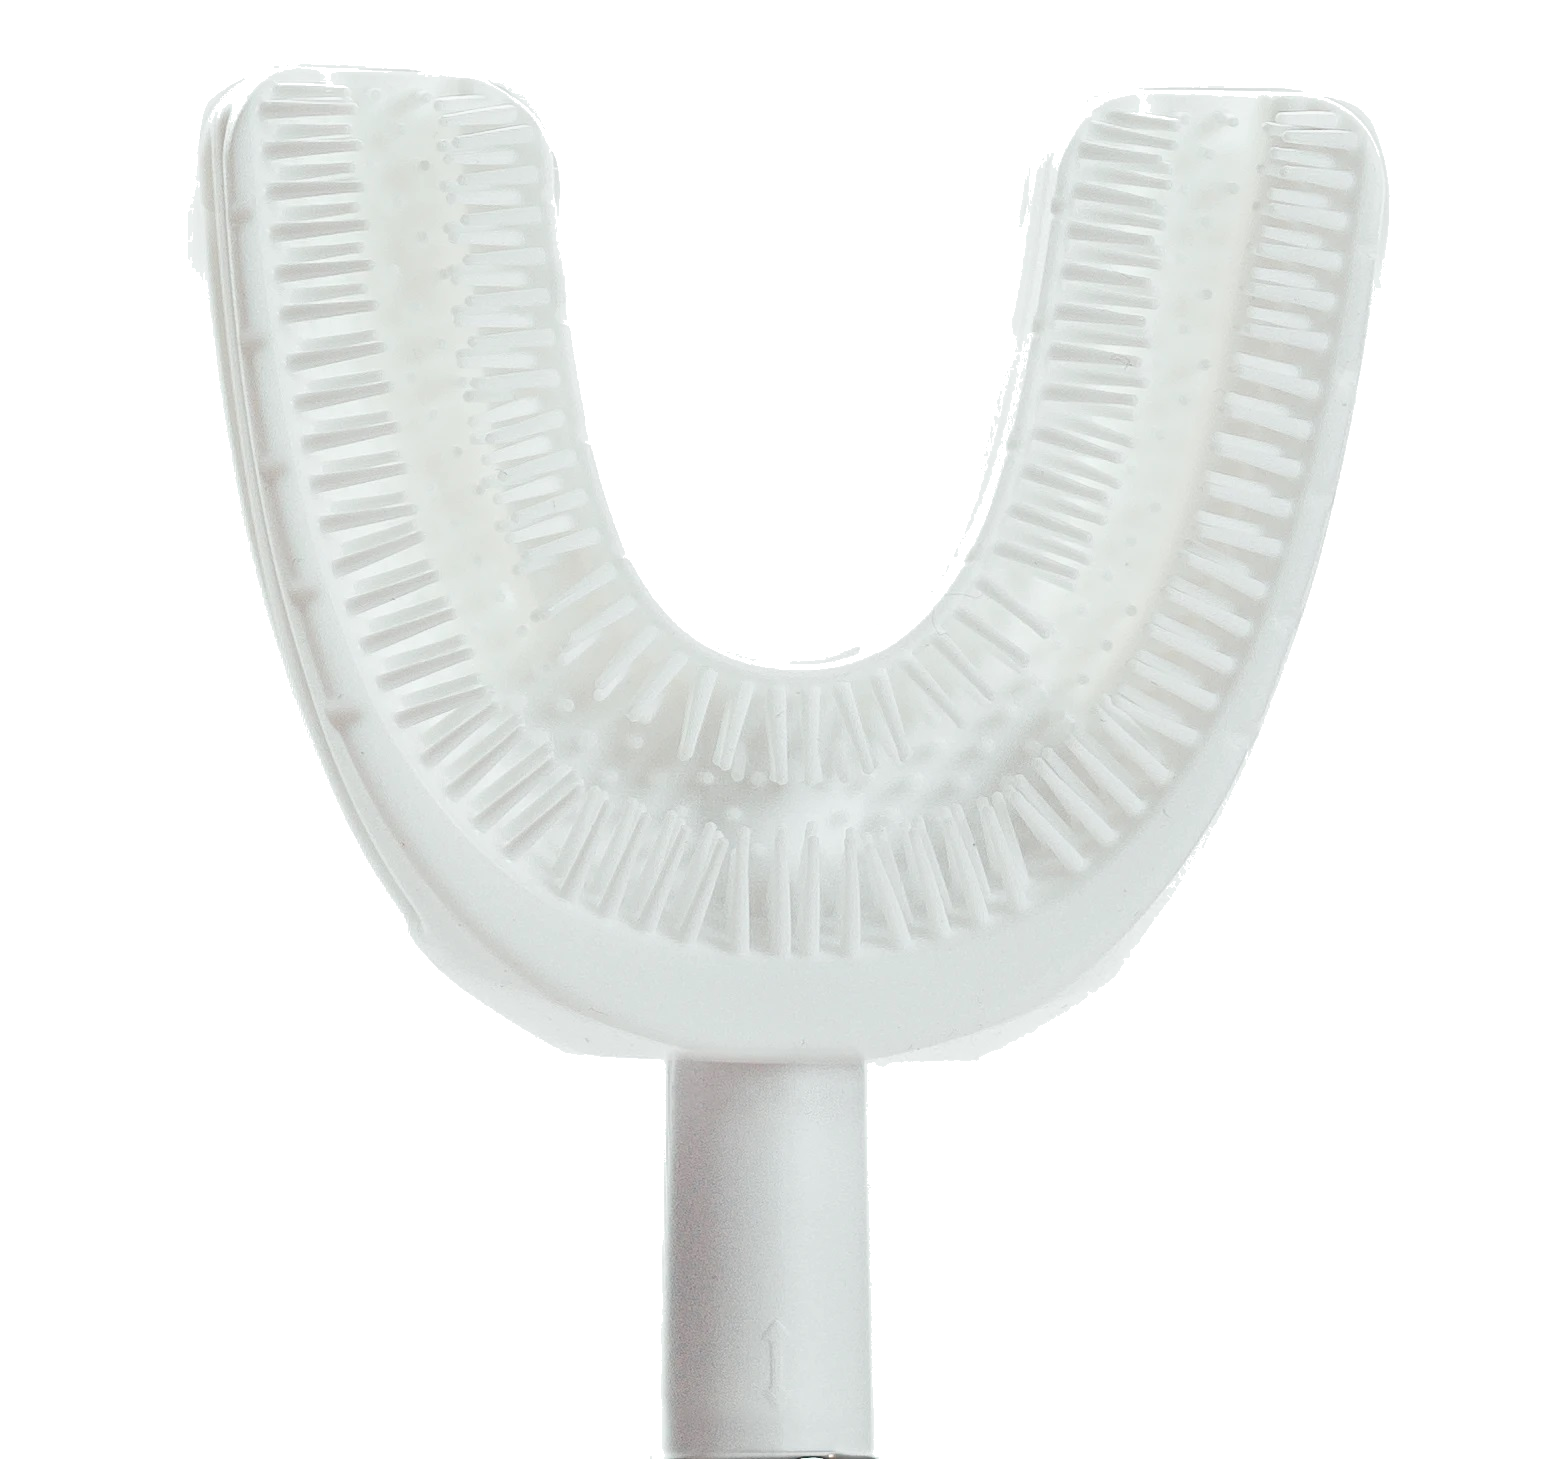 EZ Teethbrush™ Head - 3 Pack White